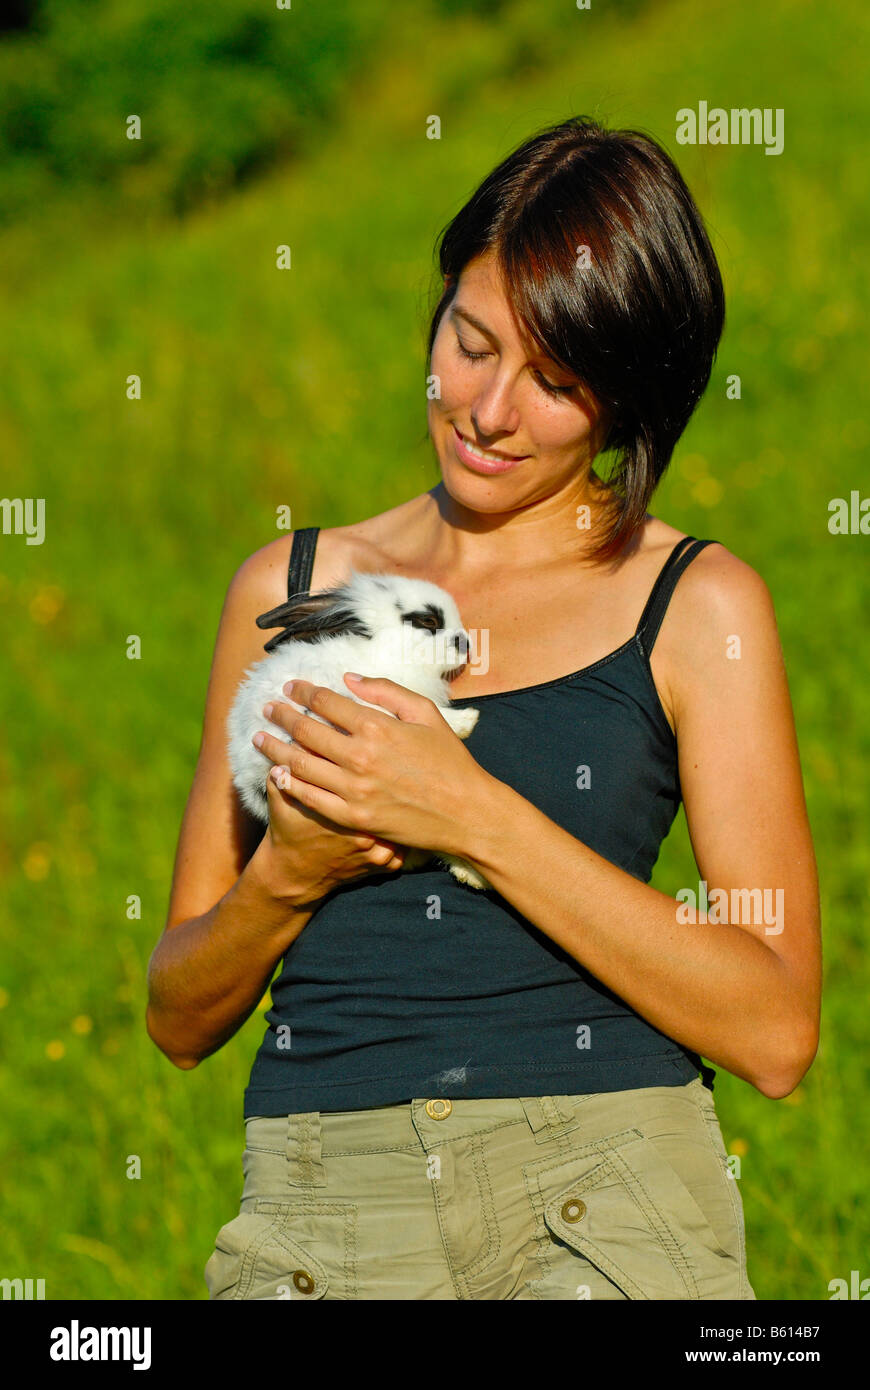 Young woman carrying a Pygmy Rabbit (Brachylagus idahoensis) Stock Photo